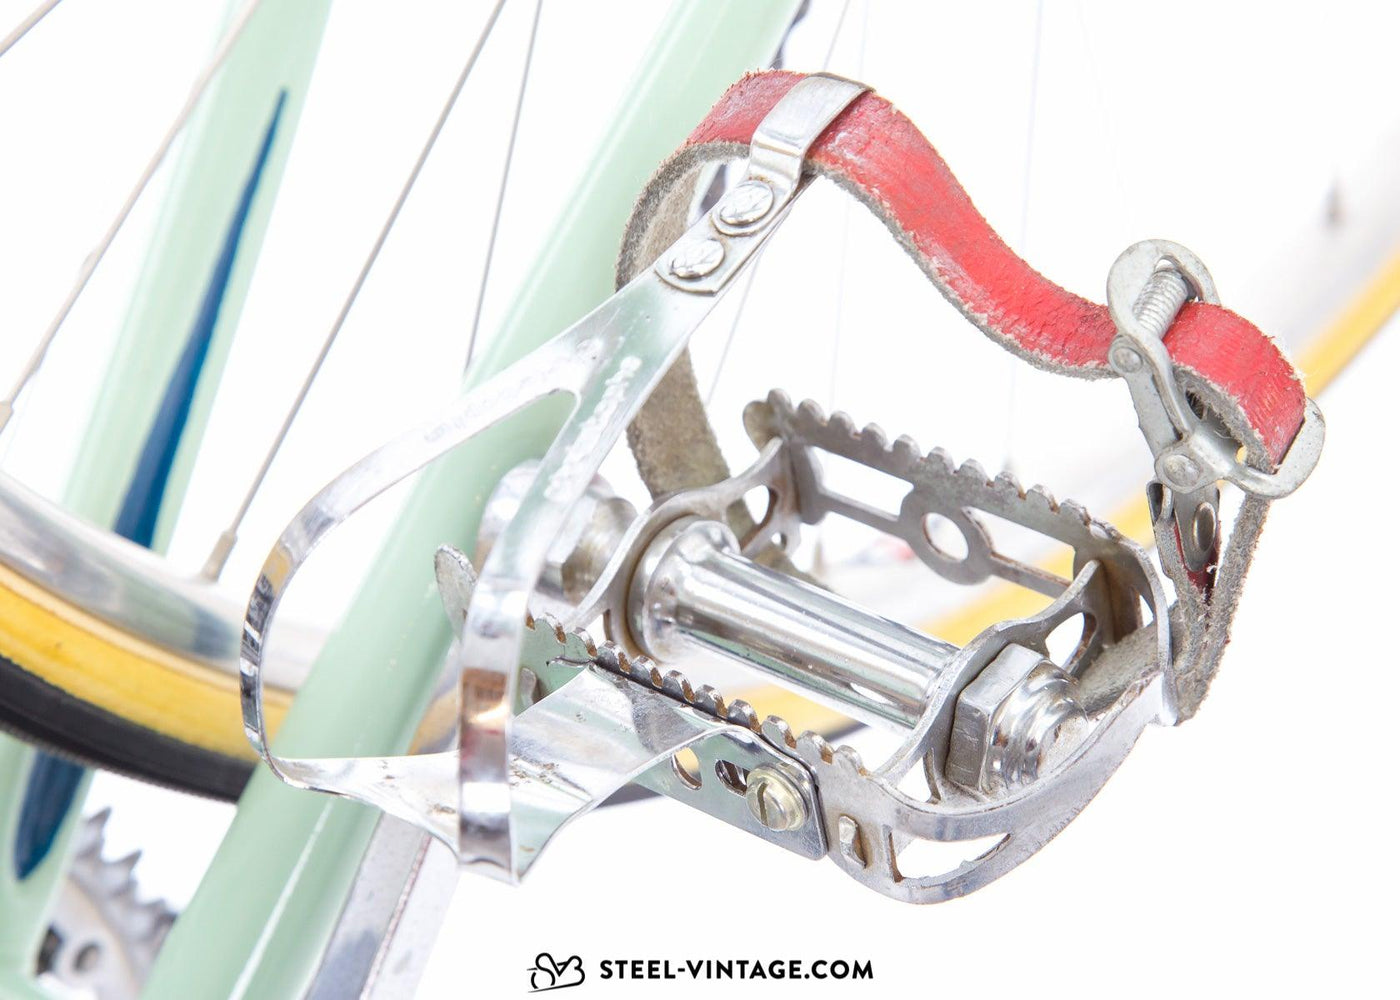 Bianchi Campione del Mondo Legendary Racing Bike 1950s - Steel Vintage Bikes